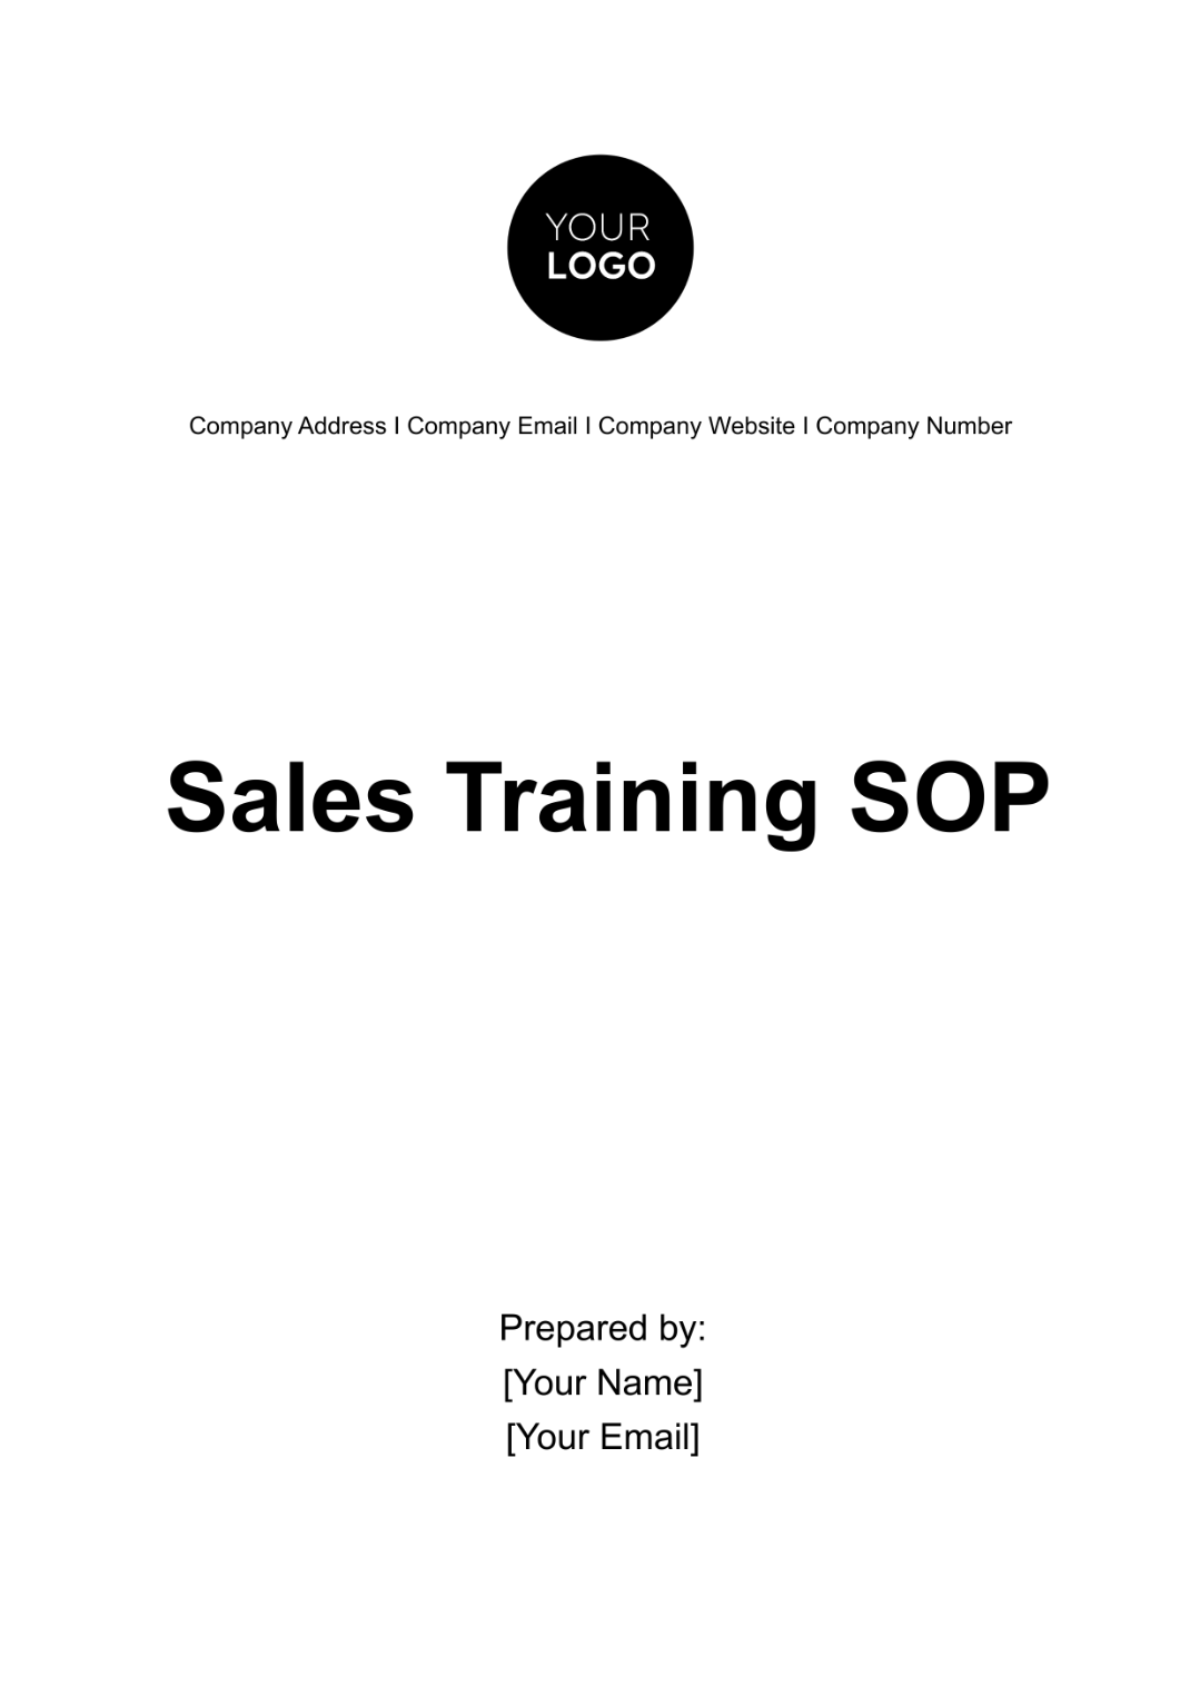 Free Sales Training SOP Template